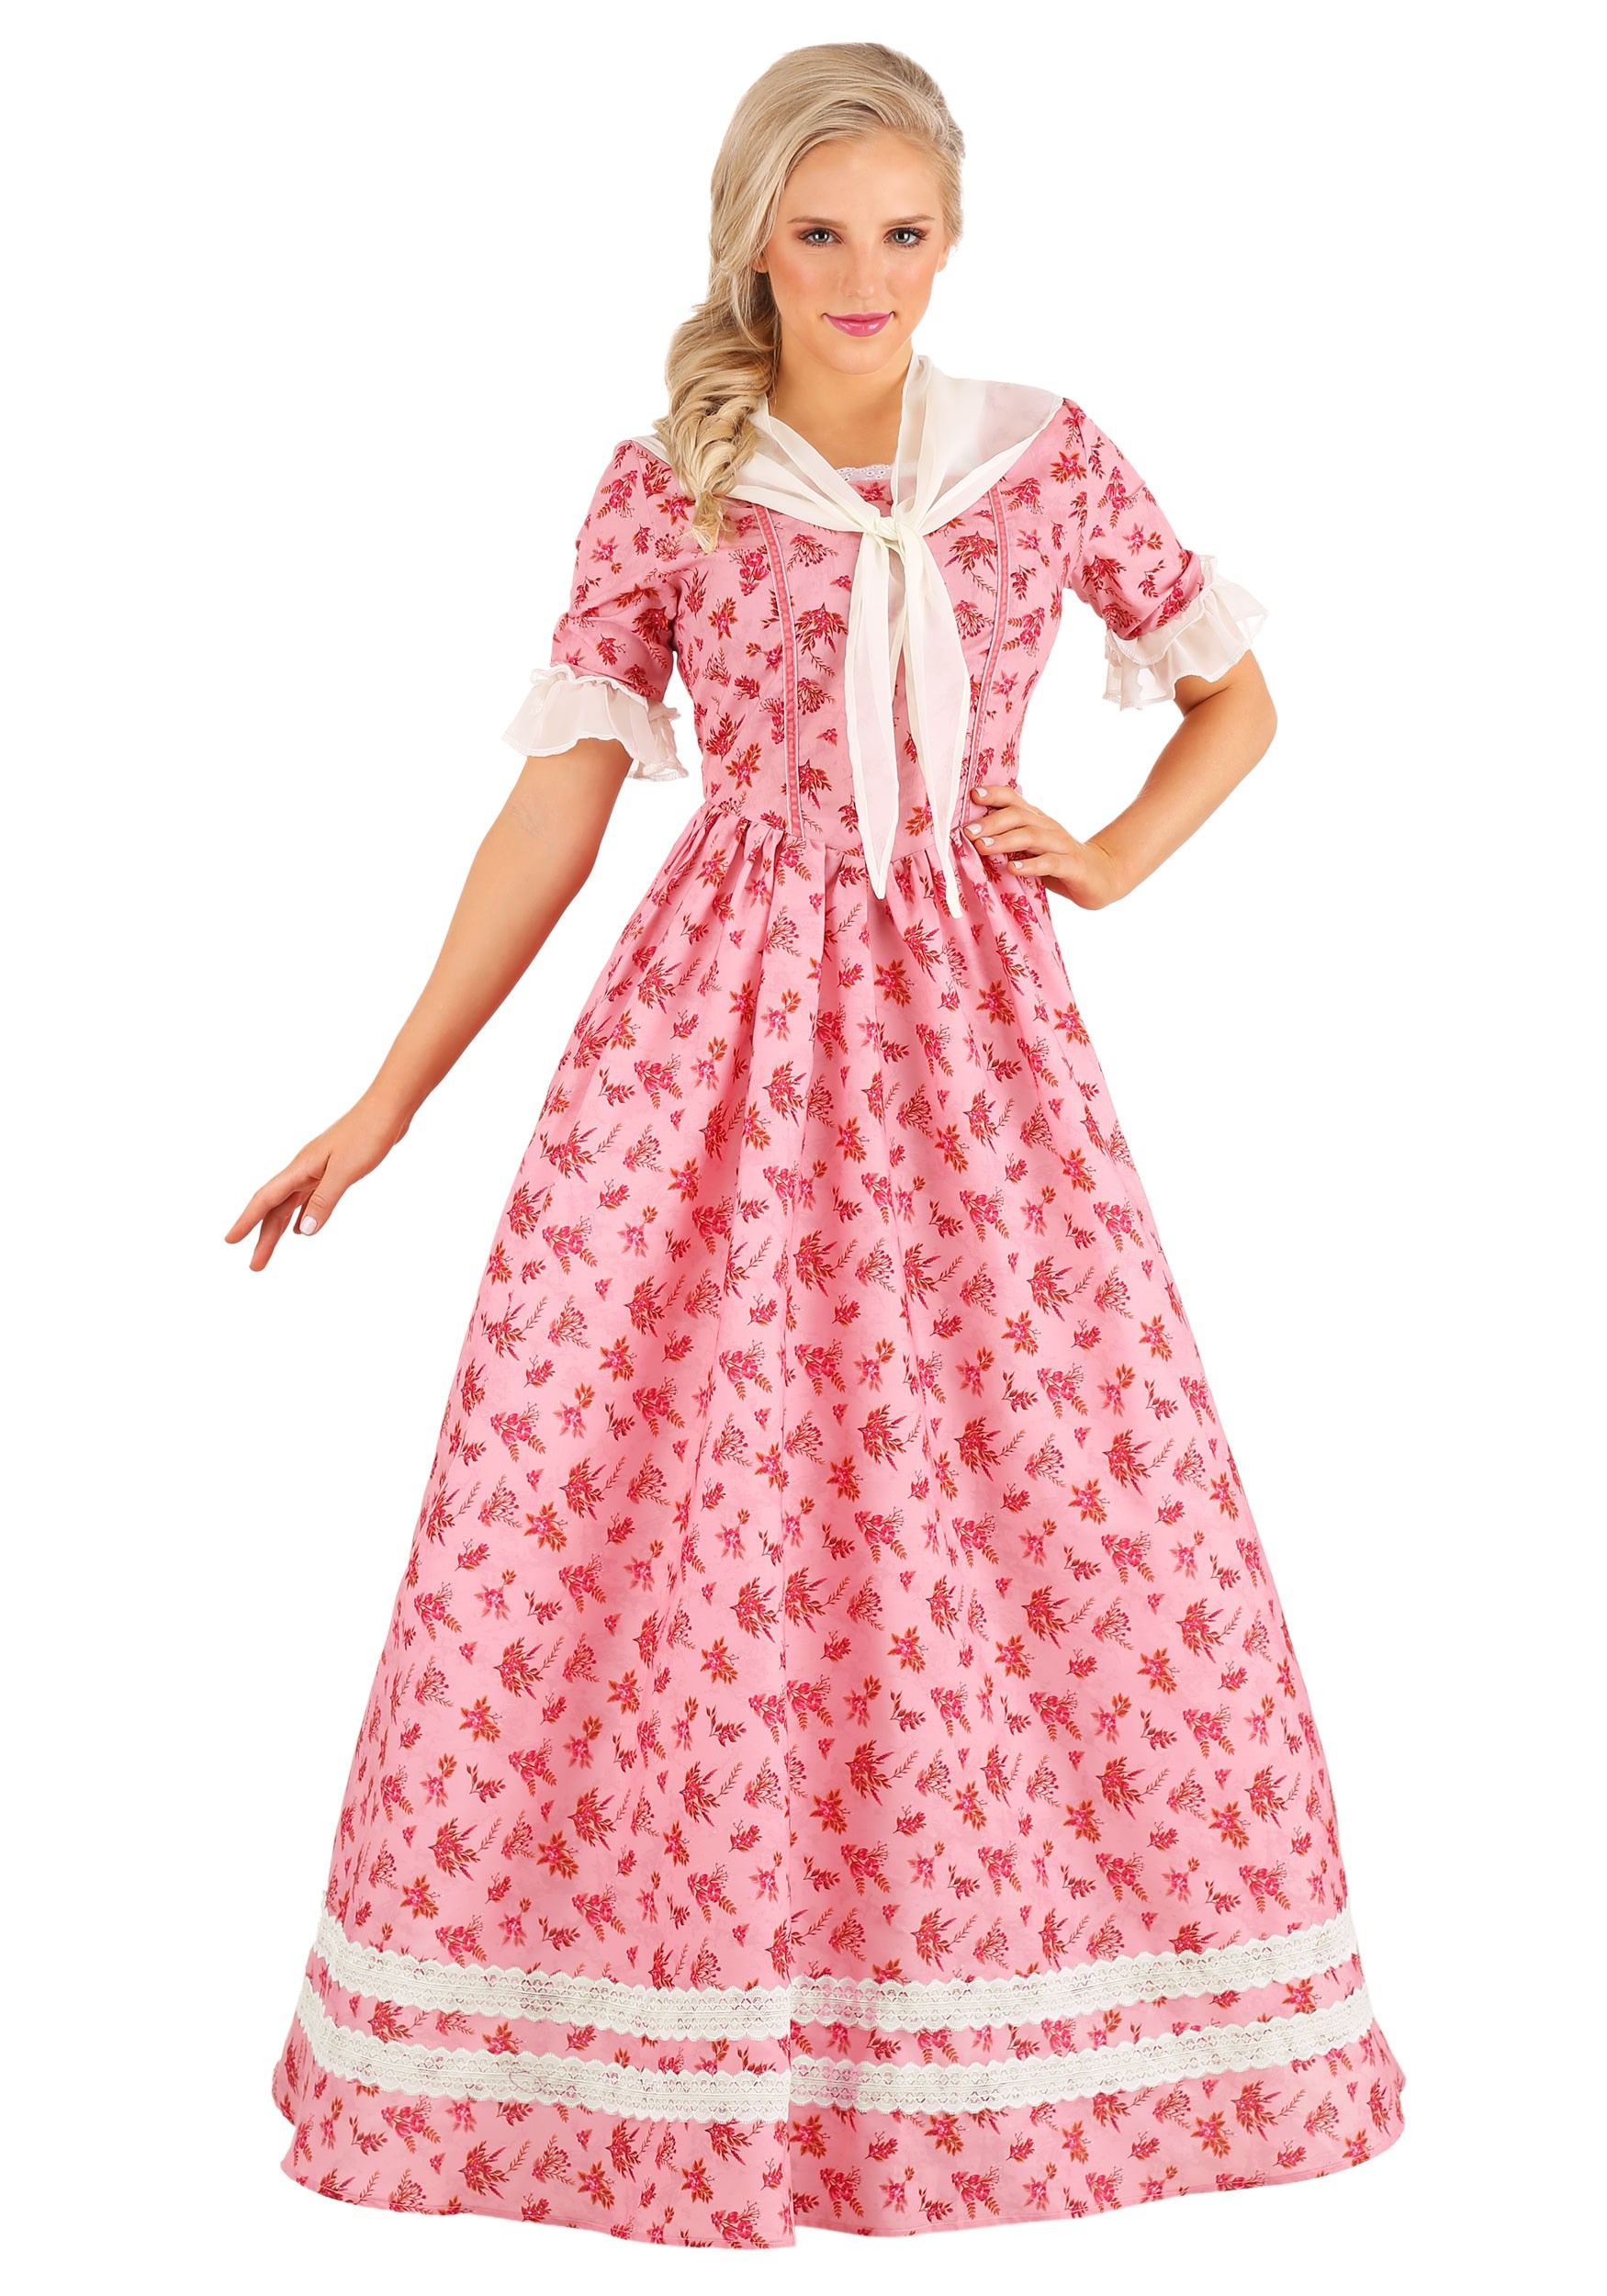 Southern Belle Dresses, Southern Belle Costumes & Patterns Lovely Southern Belle Womens Costume $49.99 AT vintagedancer.com